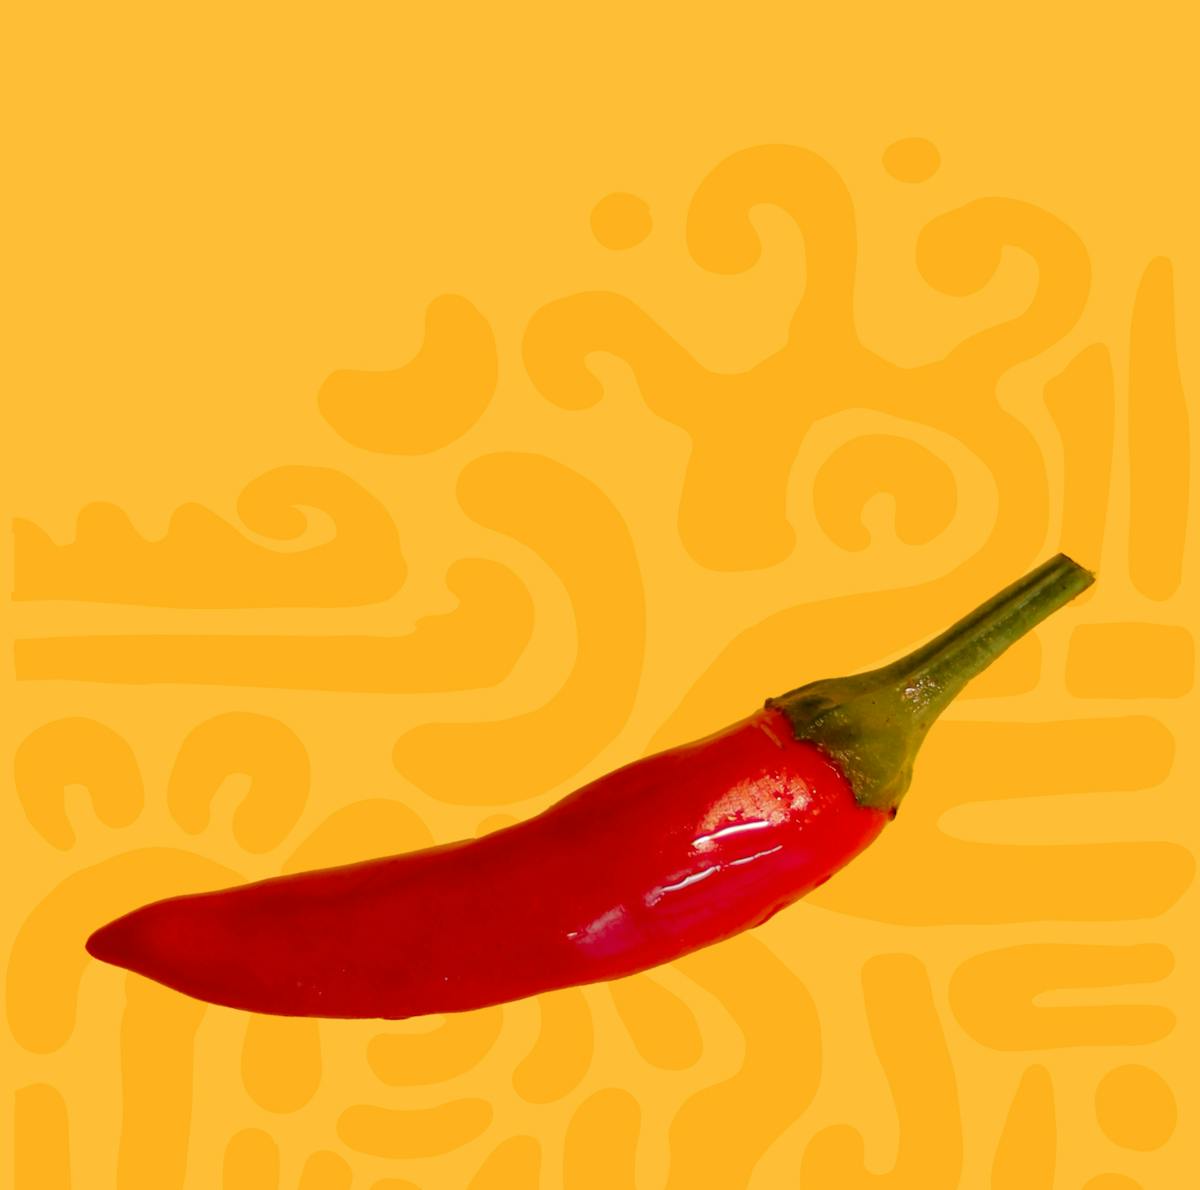 Website, branding and menu design for local mexican restaurant